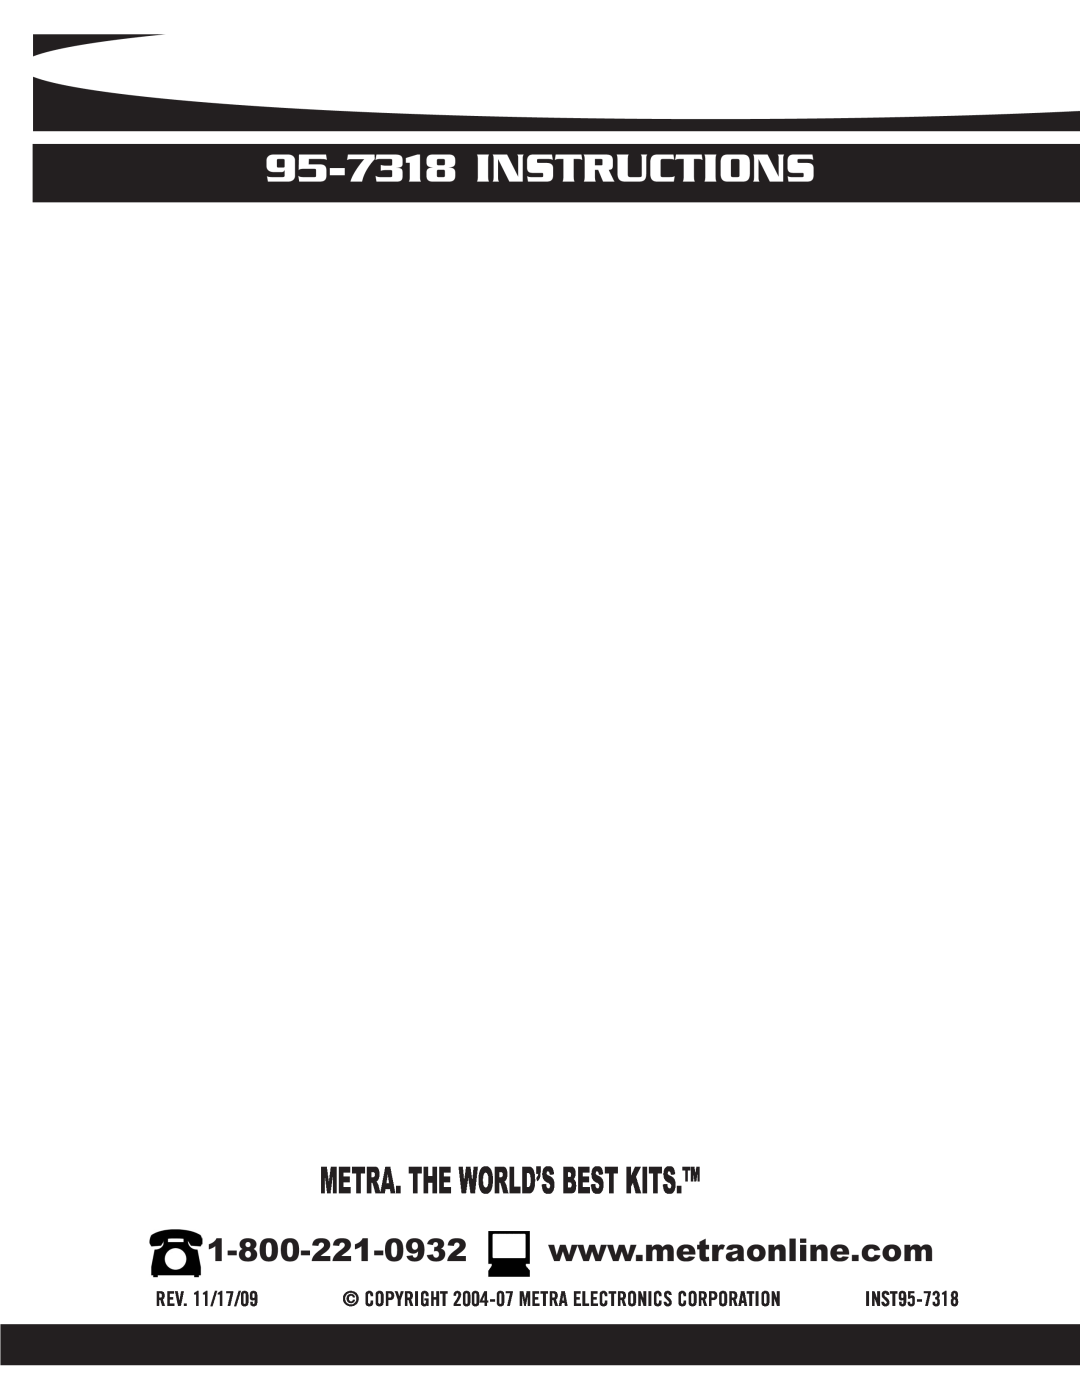 Metra Electronics installation instructions Instructions, Metra. The World’S Best Kits, REV. 11/17/09, INST95-7318 